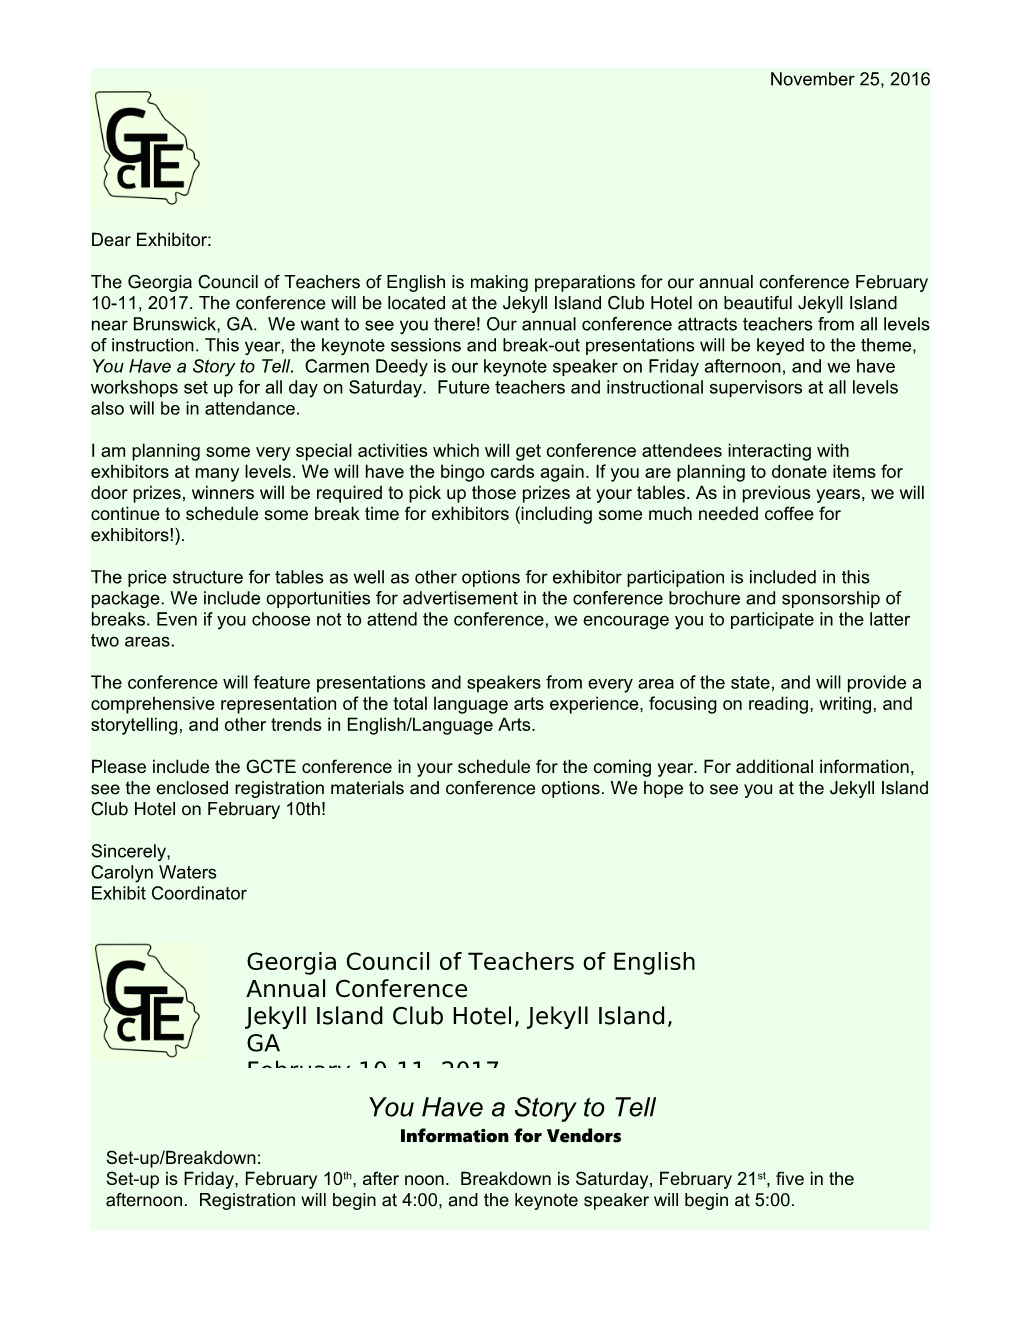 Georgia Council of Teachers of English